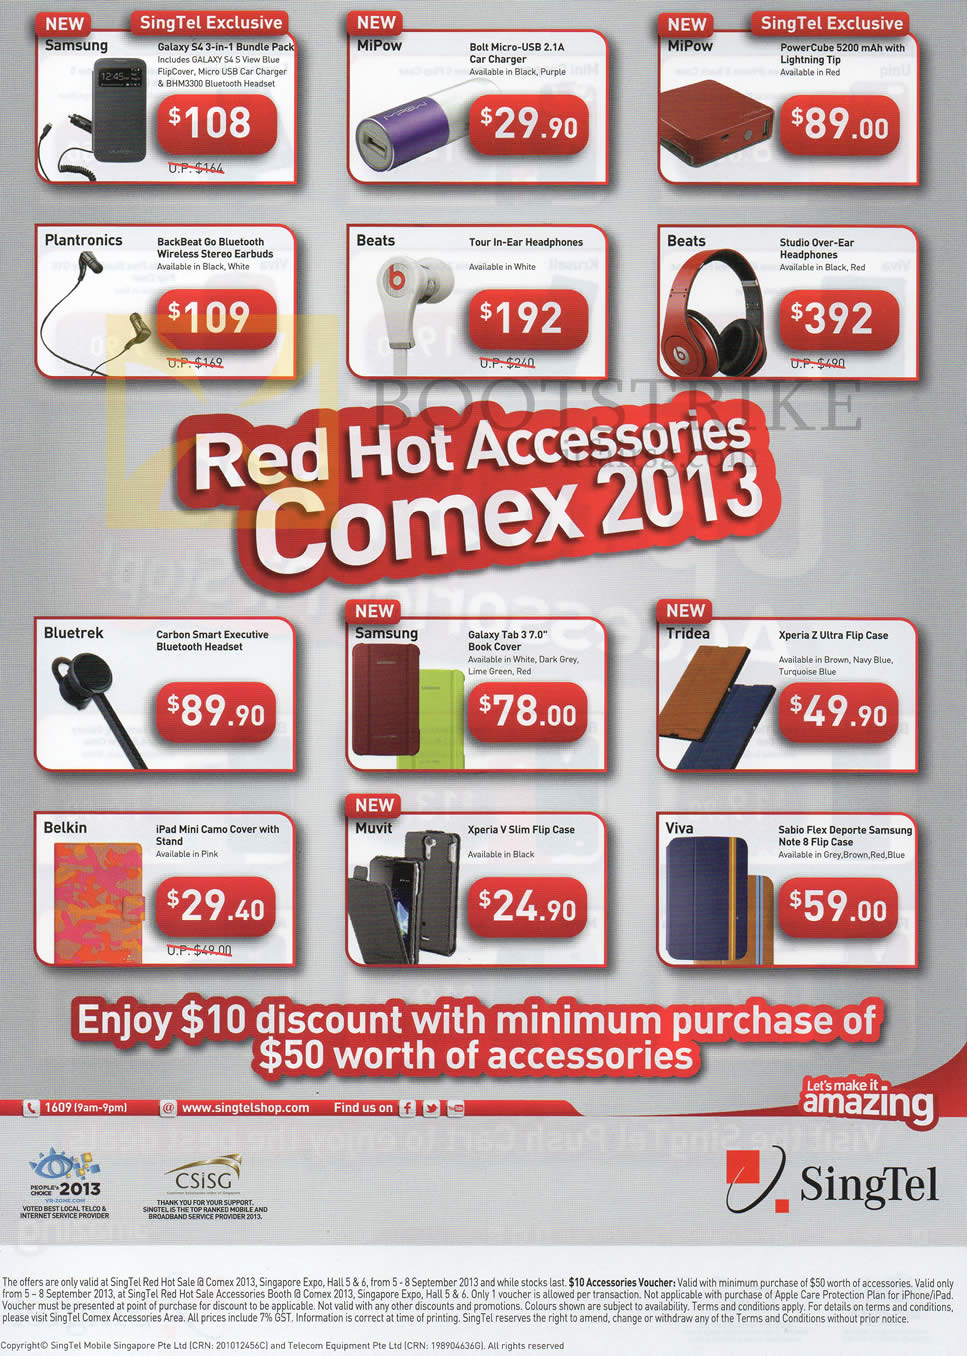 COMEX 2013 price list image brochure of Singtel Accessories Samsung S4, MiPow Charger, Beats Tour In-Ear, Stido, Plantronics, Bluetrek, Tridea, Viva, Belkin